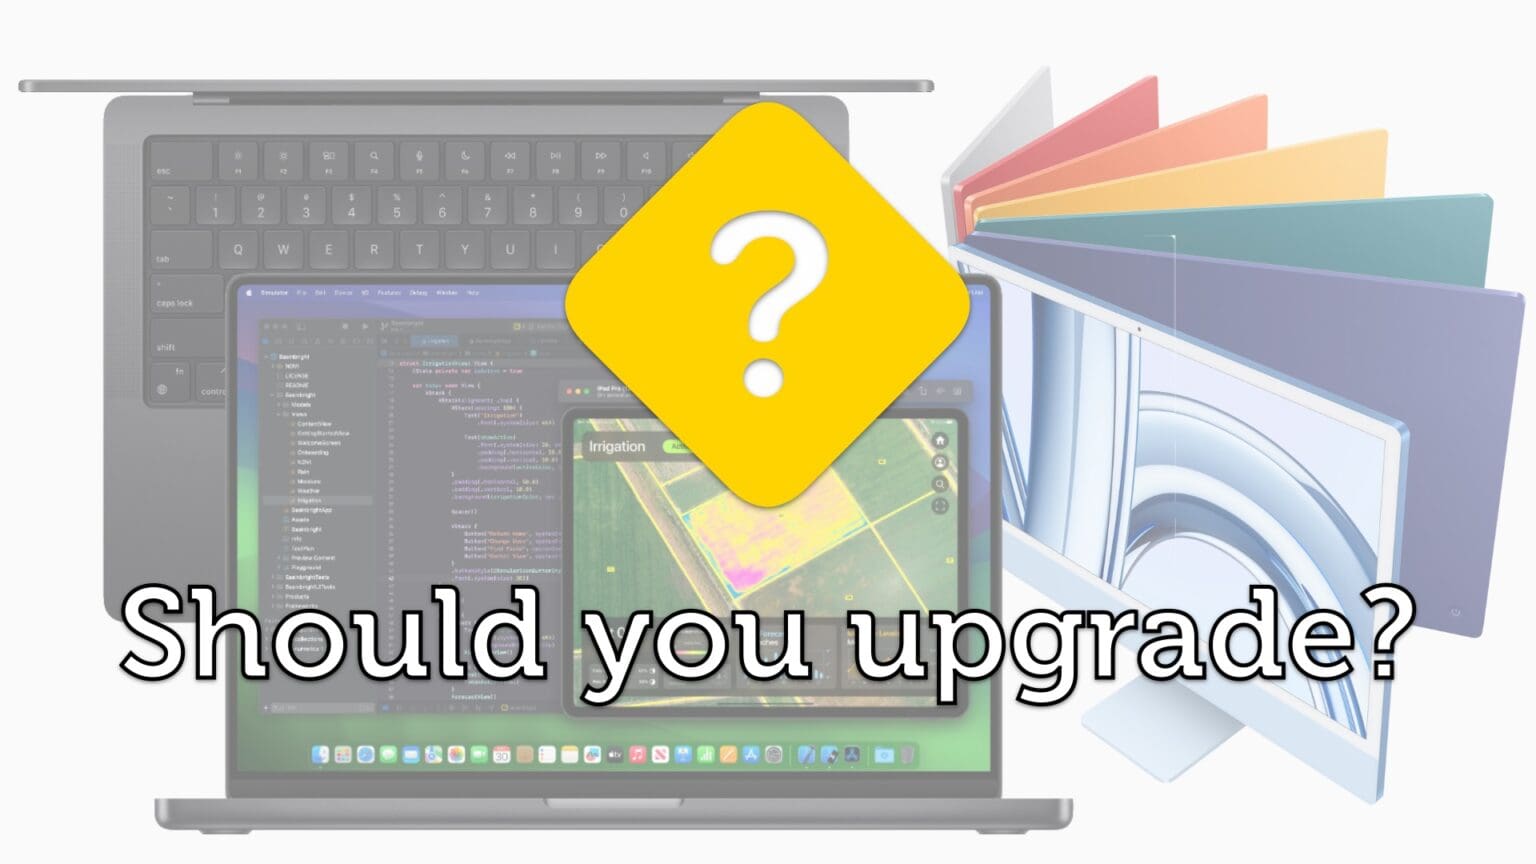 Should you upgrade?